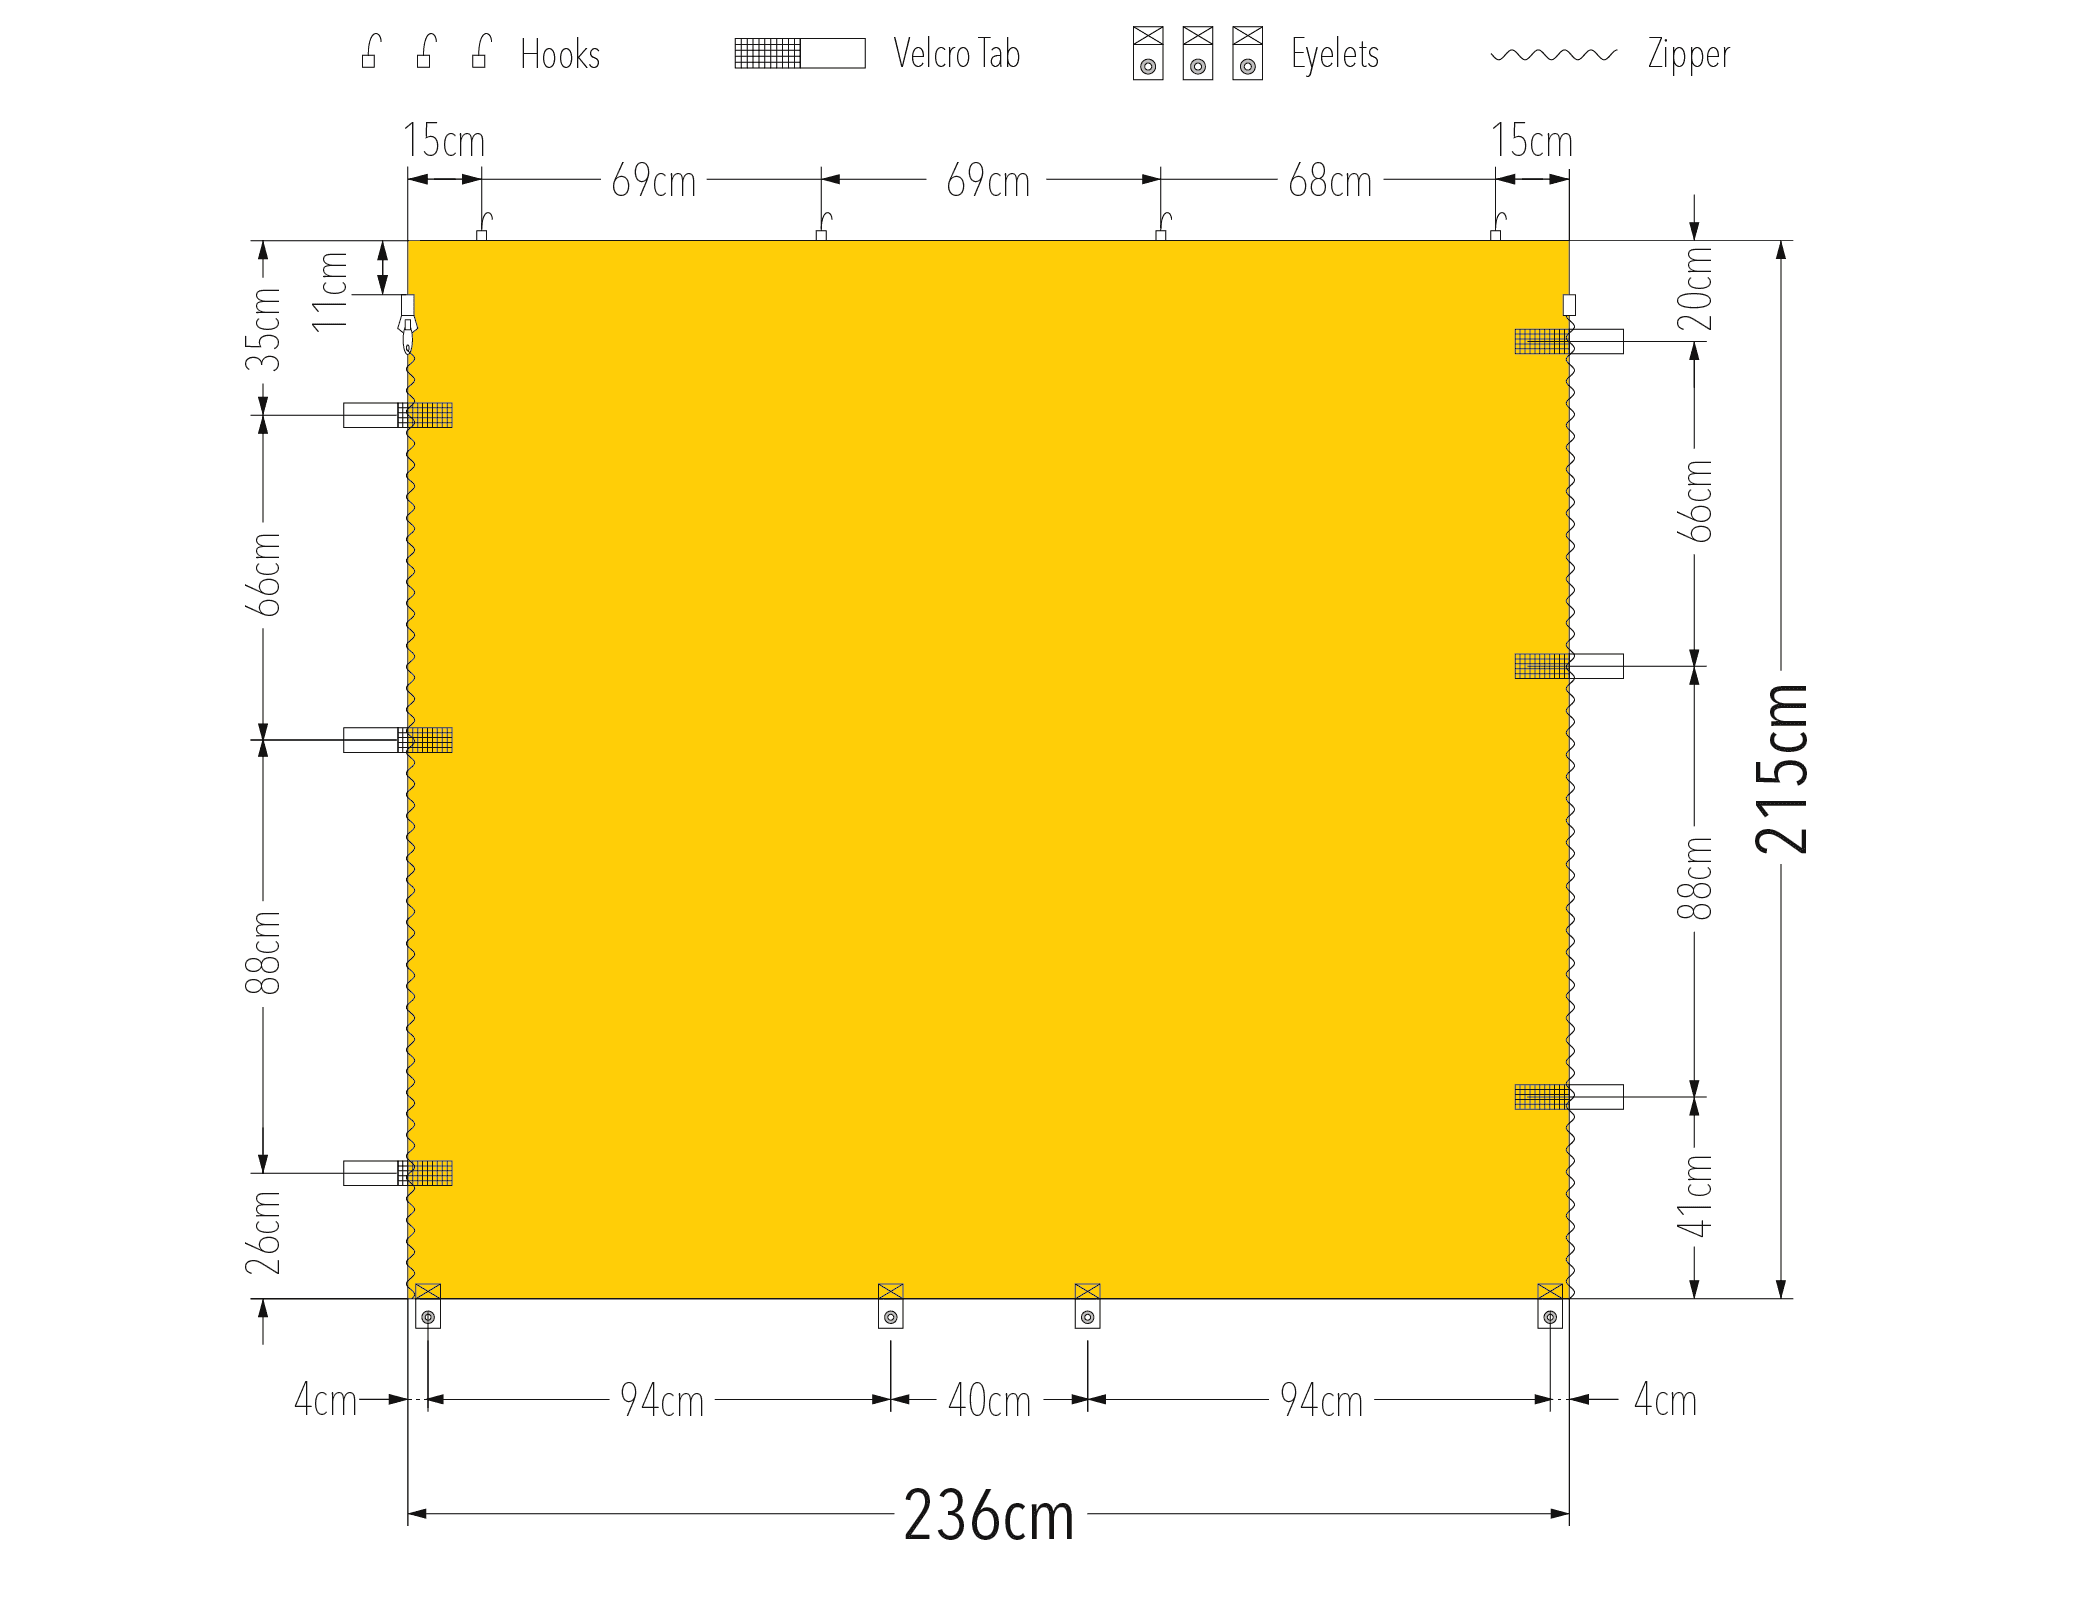 2.4m wall eyelet spacing diagram